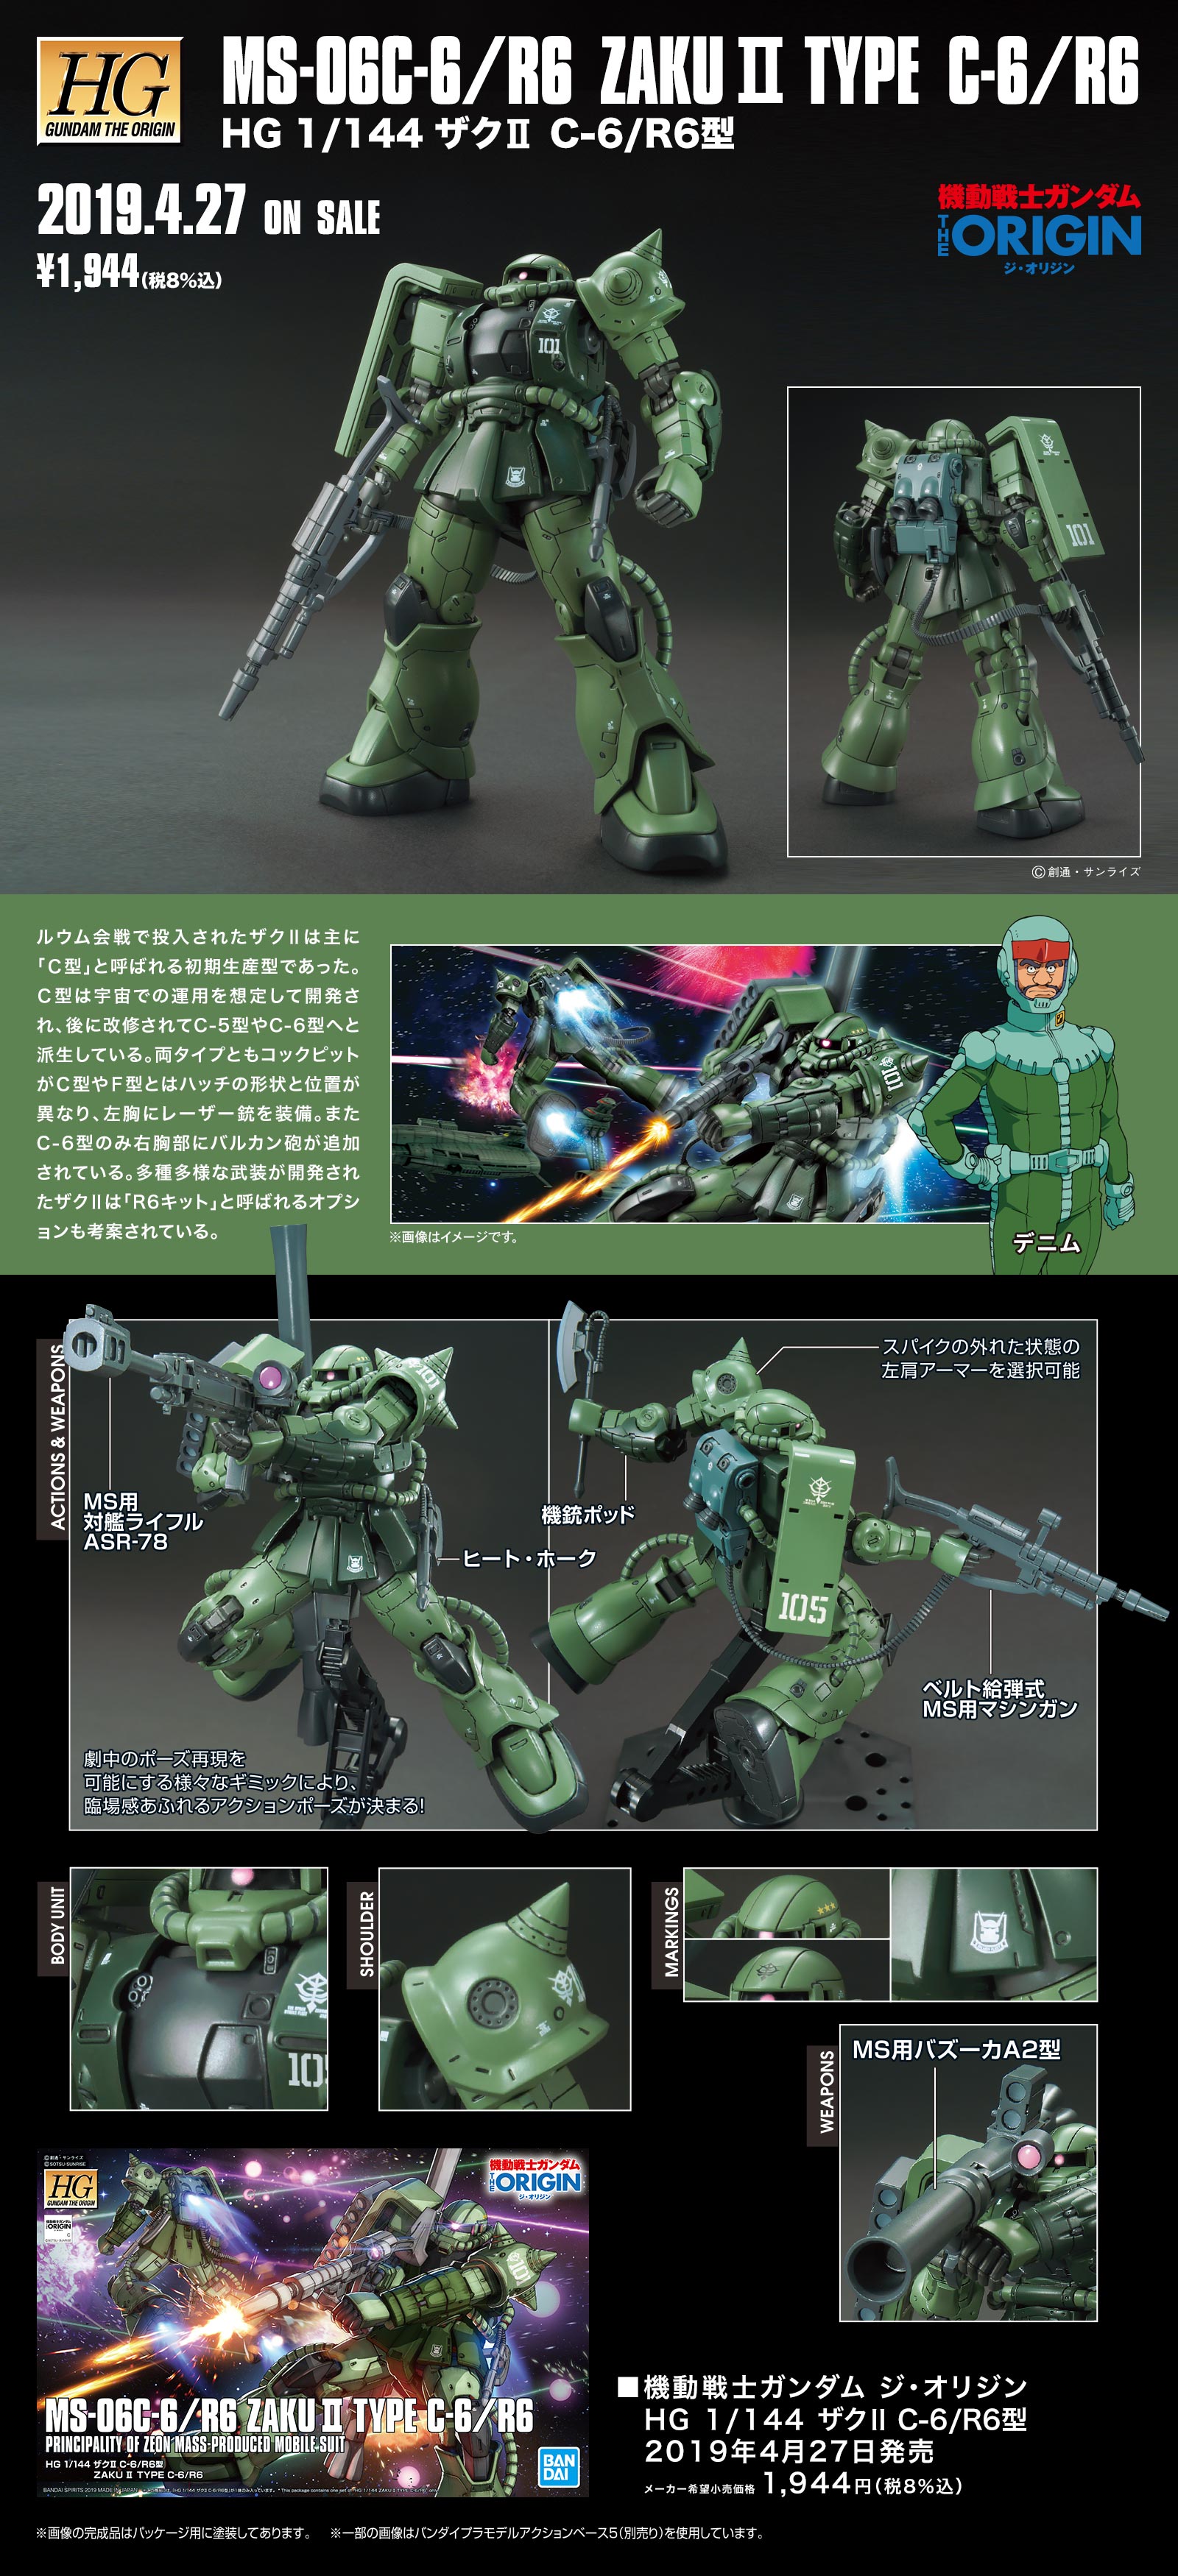 GUNDAM 1/144 Zaku II Type C-6/R6 Model Kit HGGO # 025 Bandai 